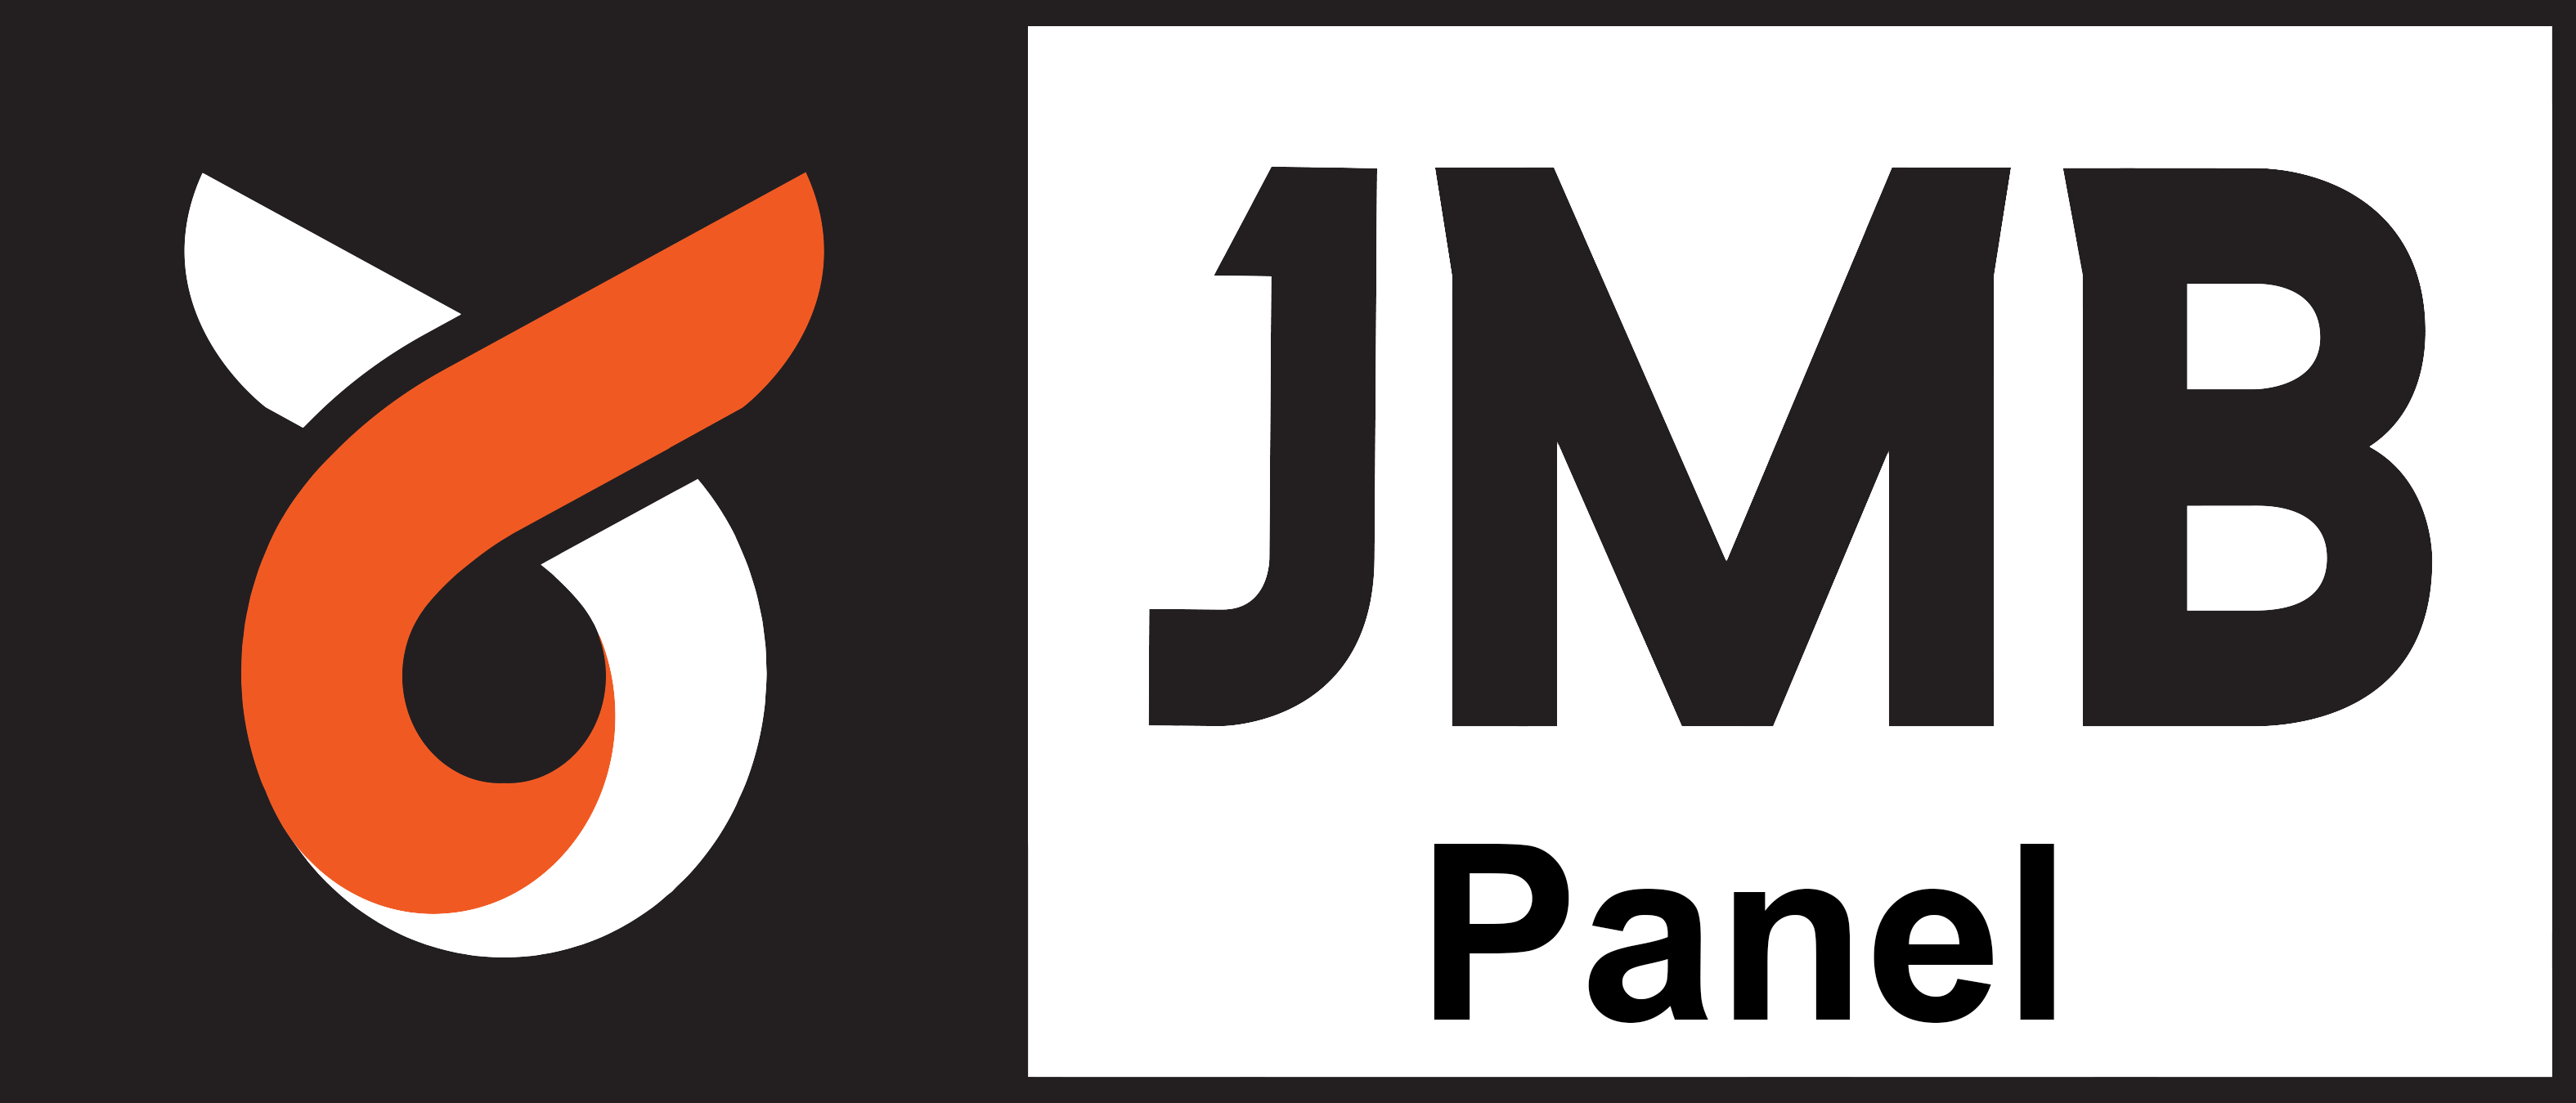 cropped-JMB-Panels-1.png